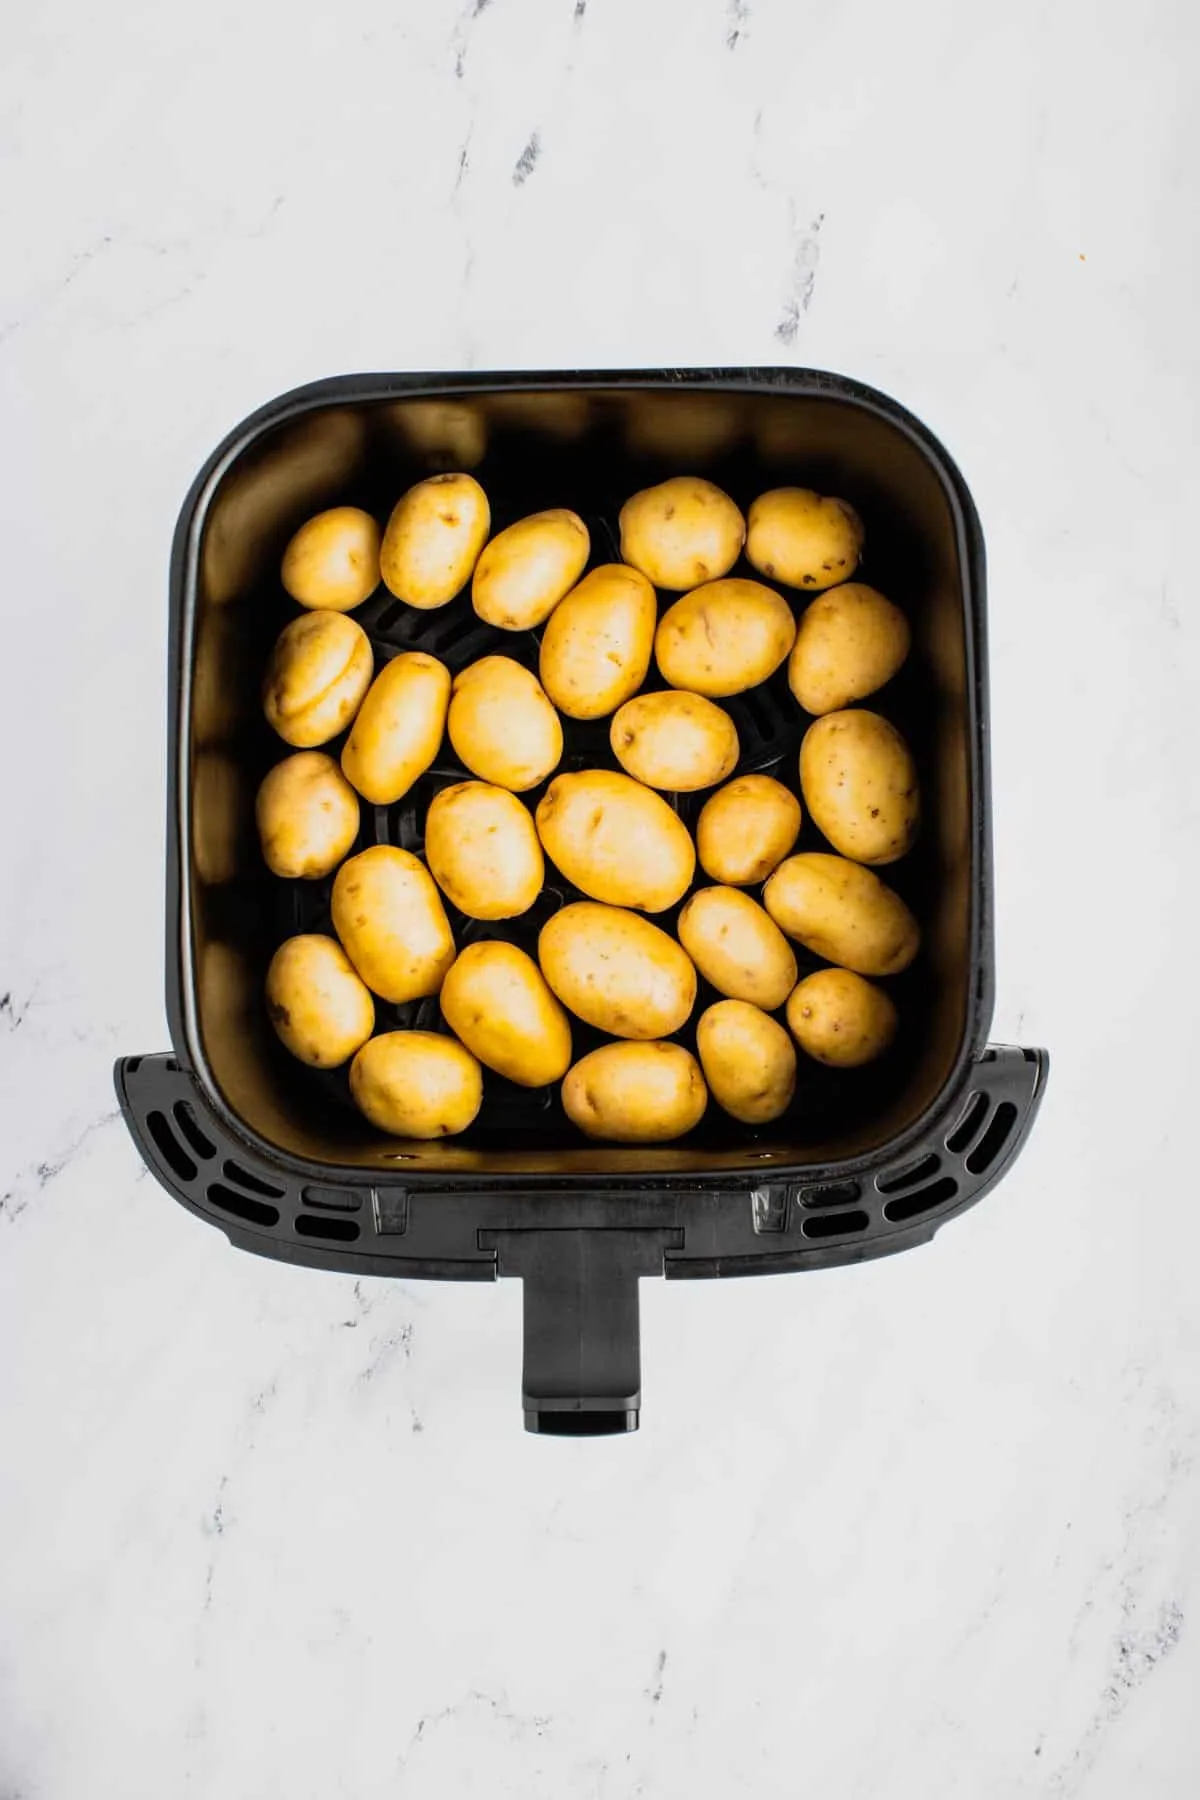 baby gold potatoes in an air fryer basket